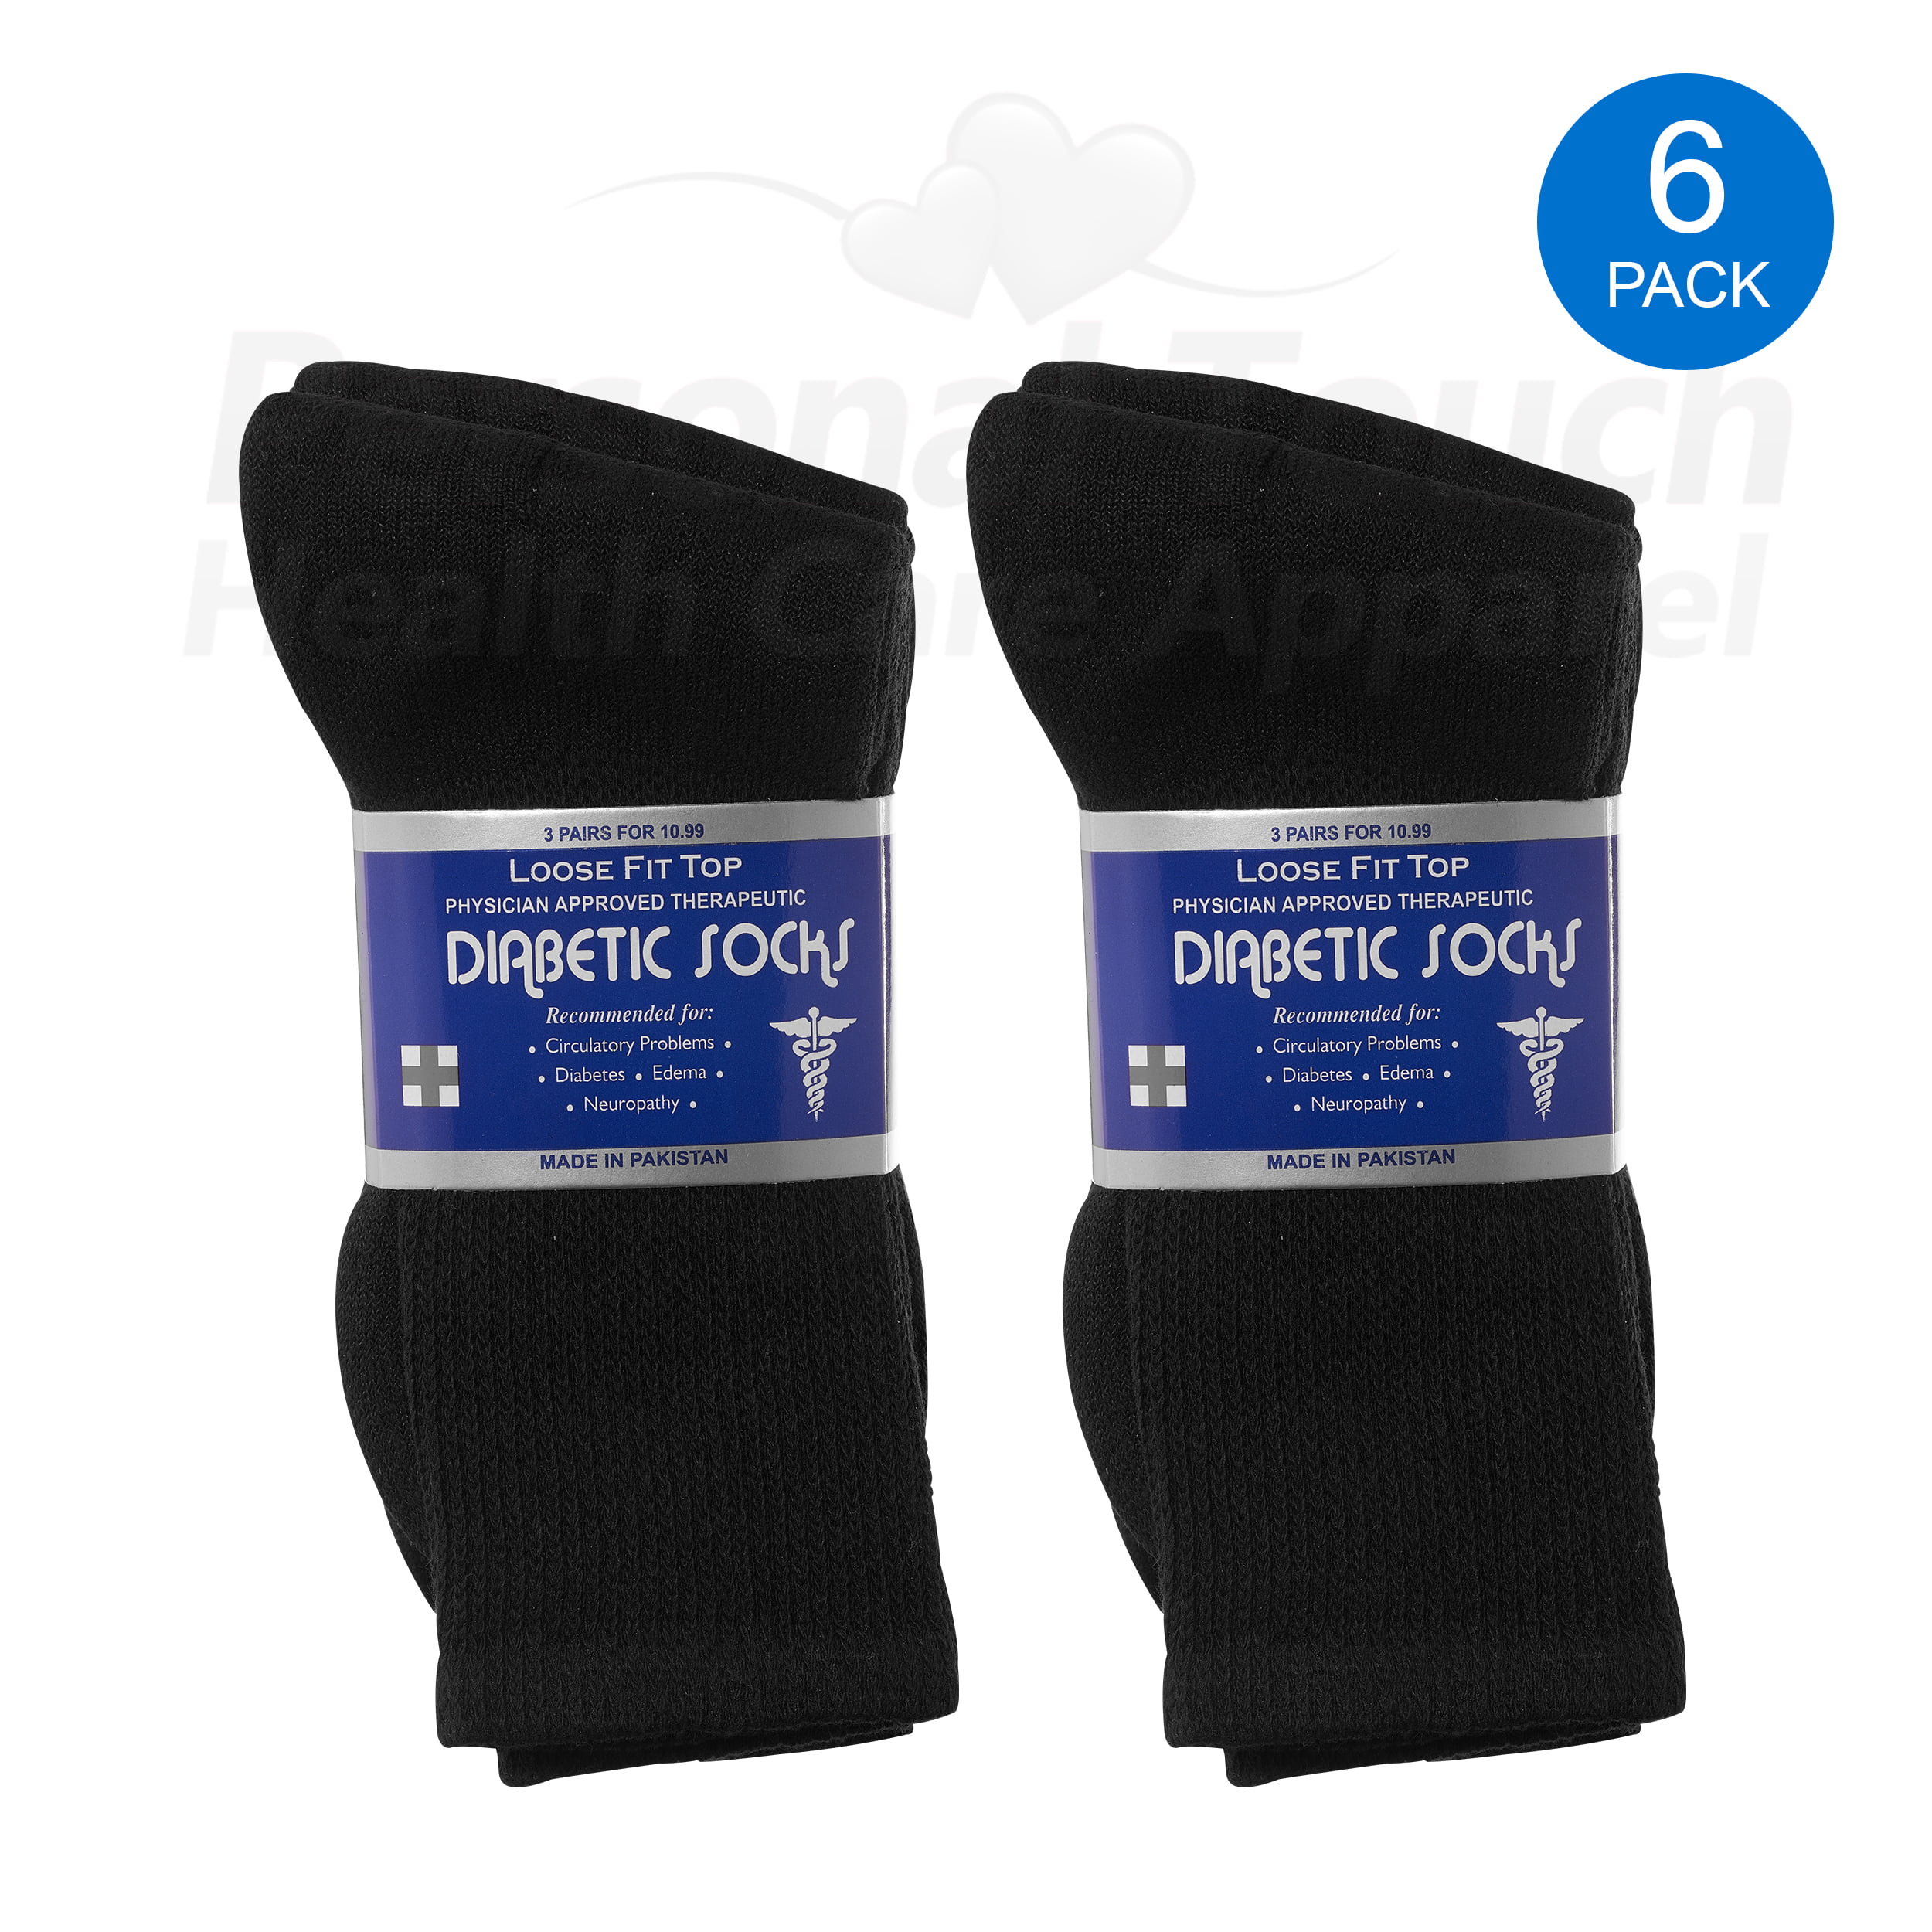 MADE IN USA Best quality 12 pair  men's  black Diabetic crew socks sz 10-13 